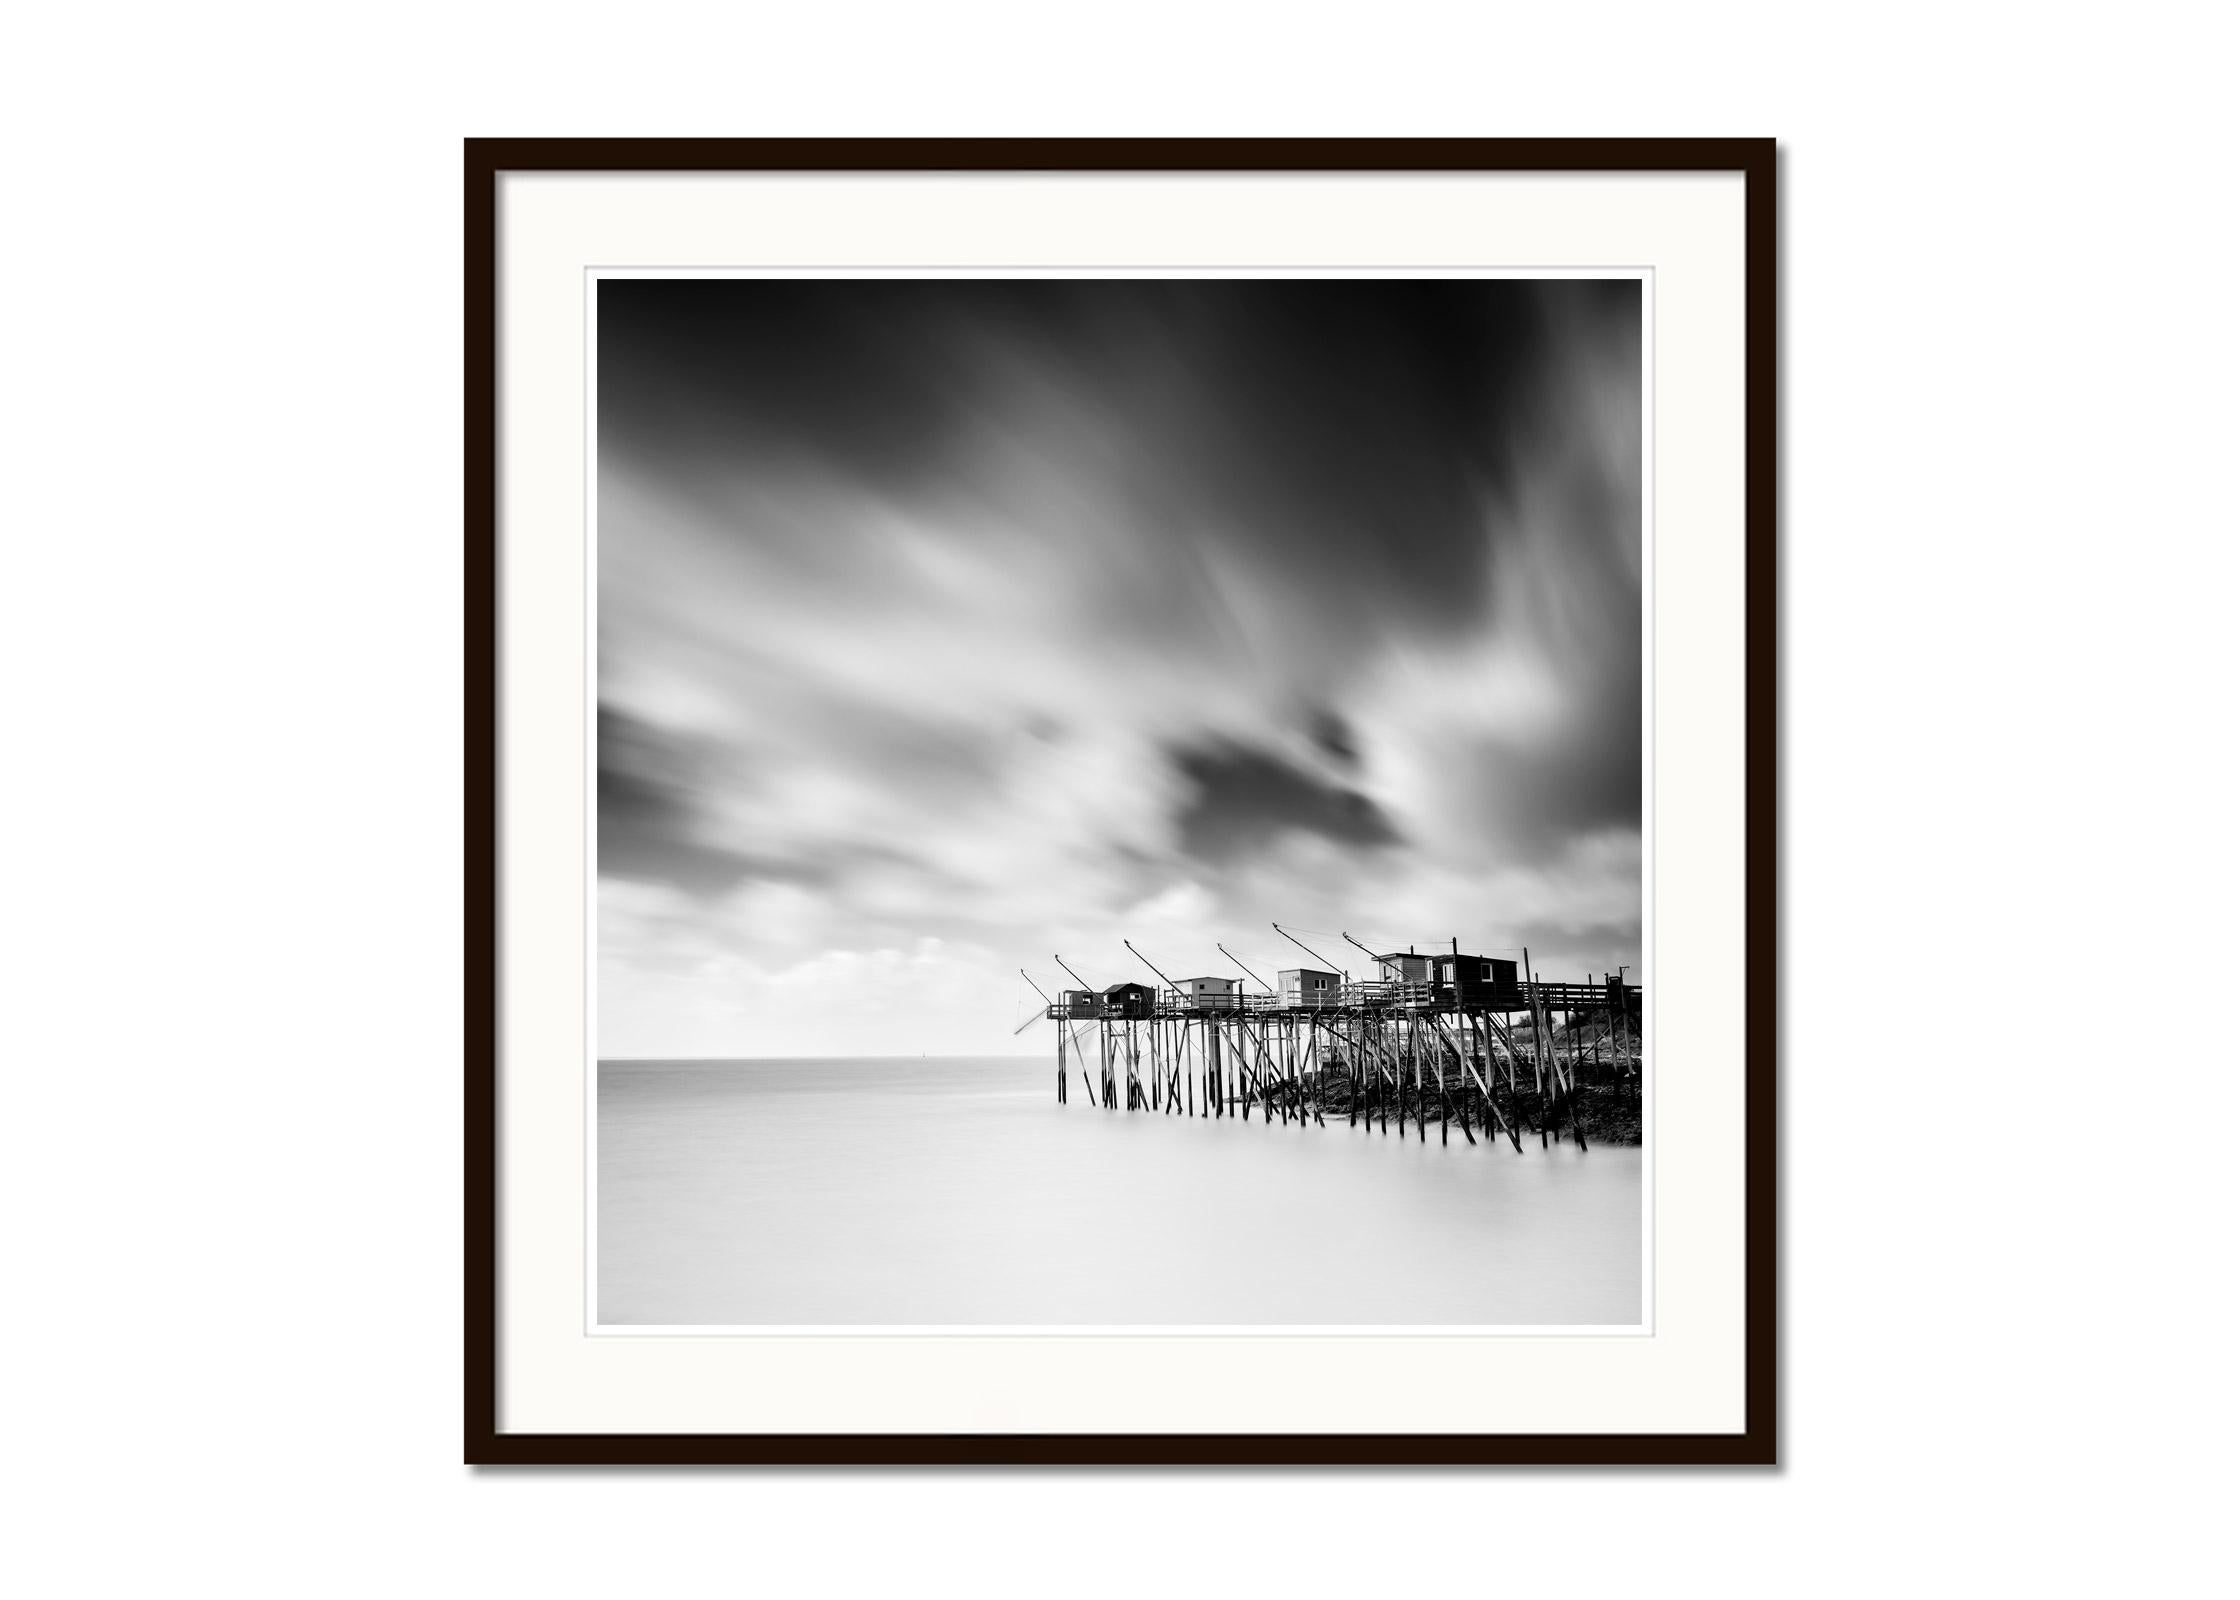 Fishing Hut on Stilts, Carrelet, Atlanic Coast, b&w art landscape photography - Gray Black and White Photograph by Gerald Berghammer